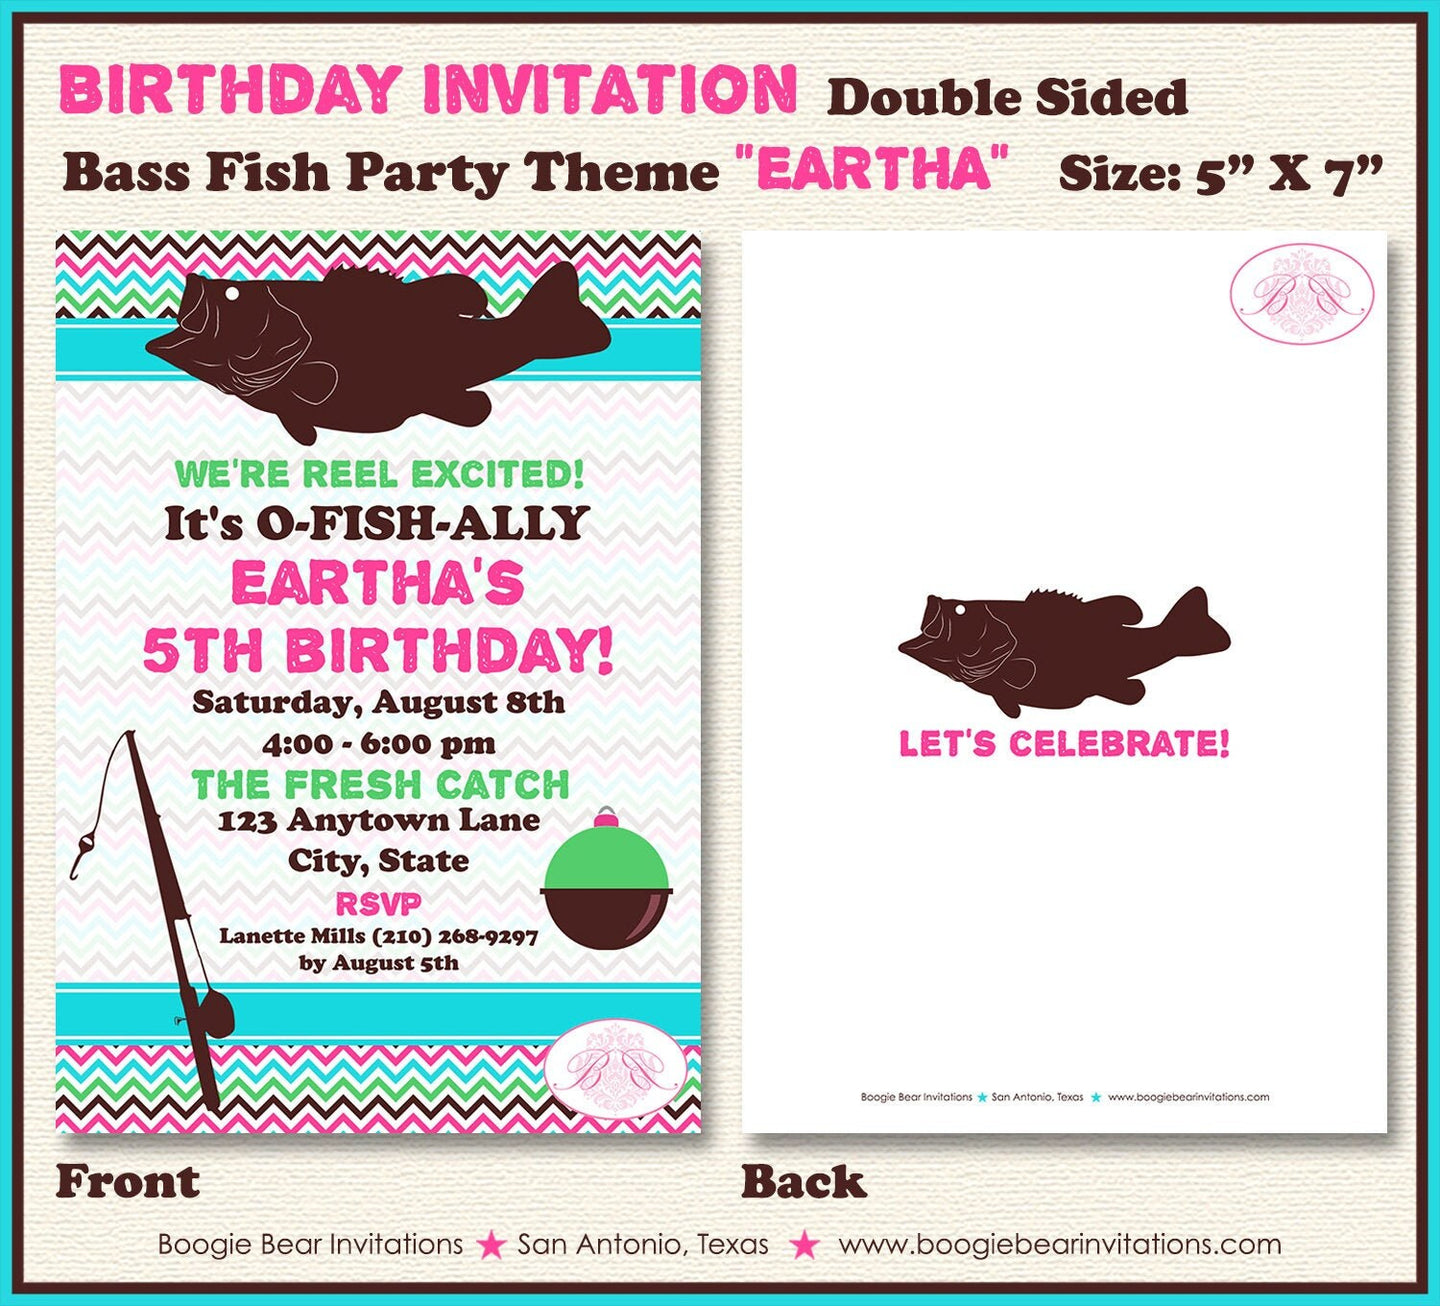 Bass Fish Fishing Birthday Party Invitation Pink Girl Rustic Lake Fly Pole Boogie Bear Invitations Eartha Theme Paperless Printable Printed